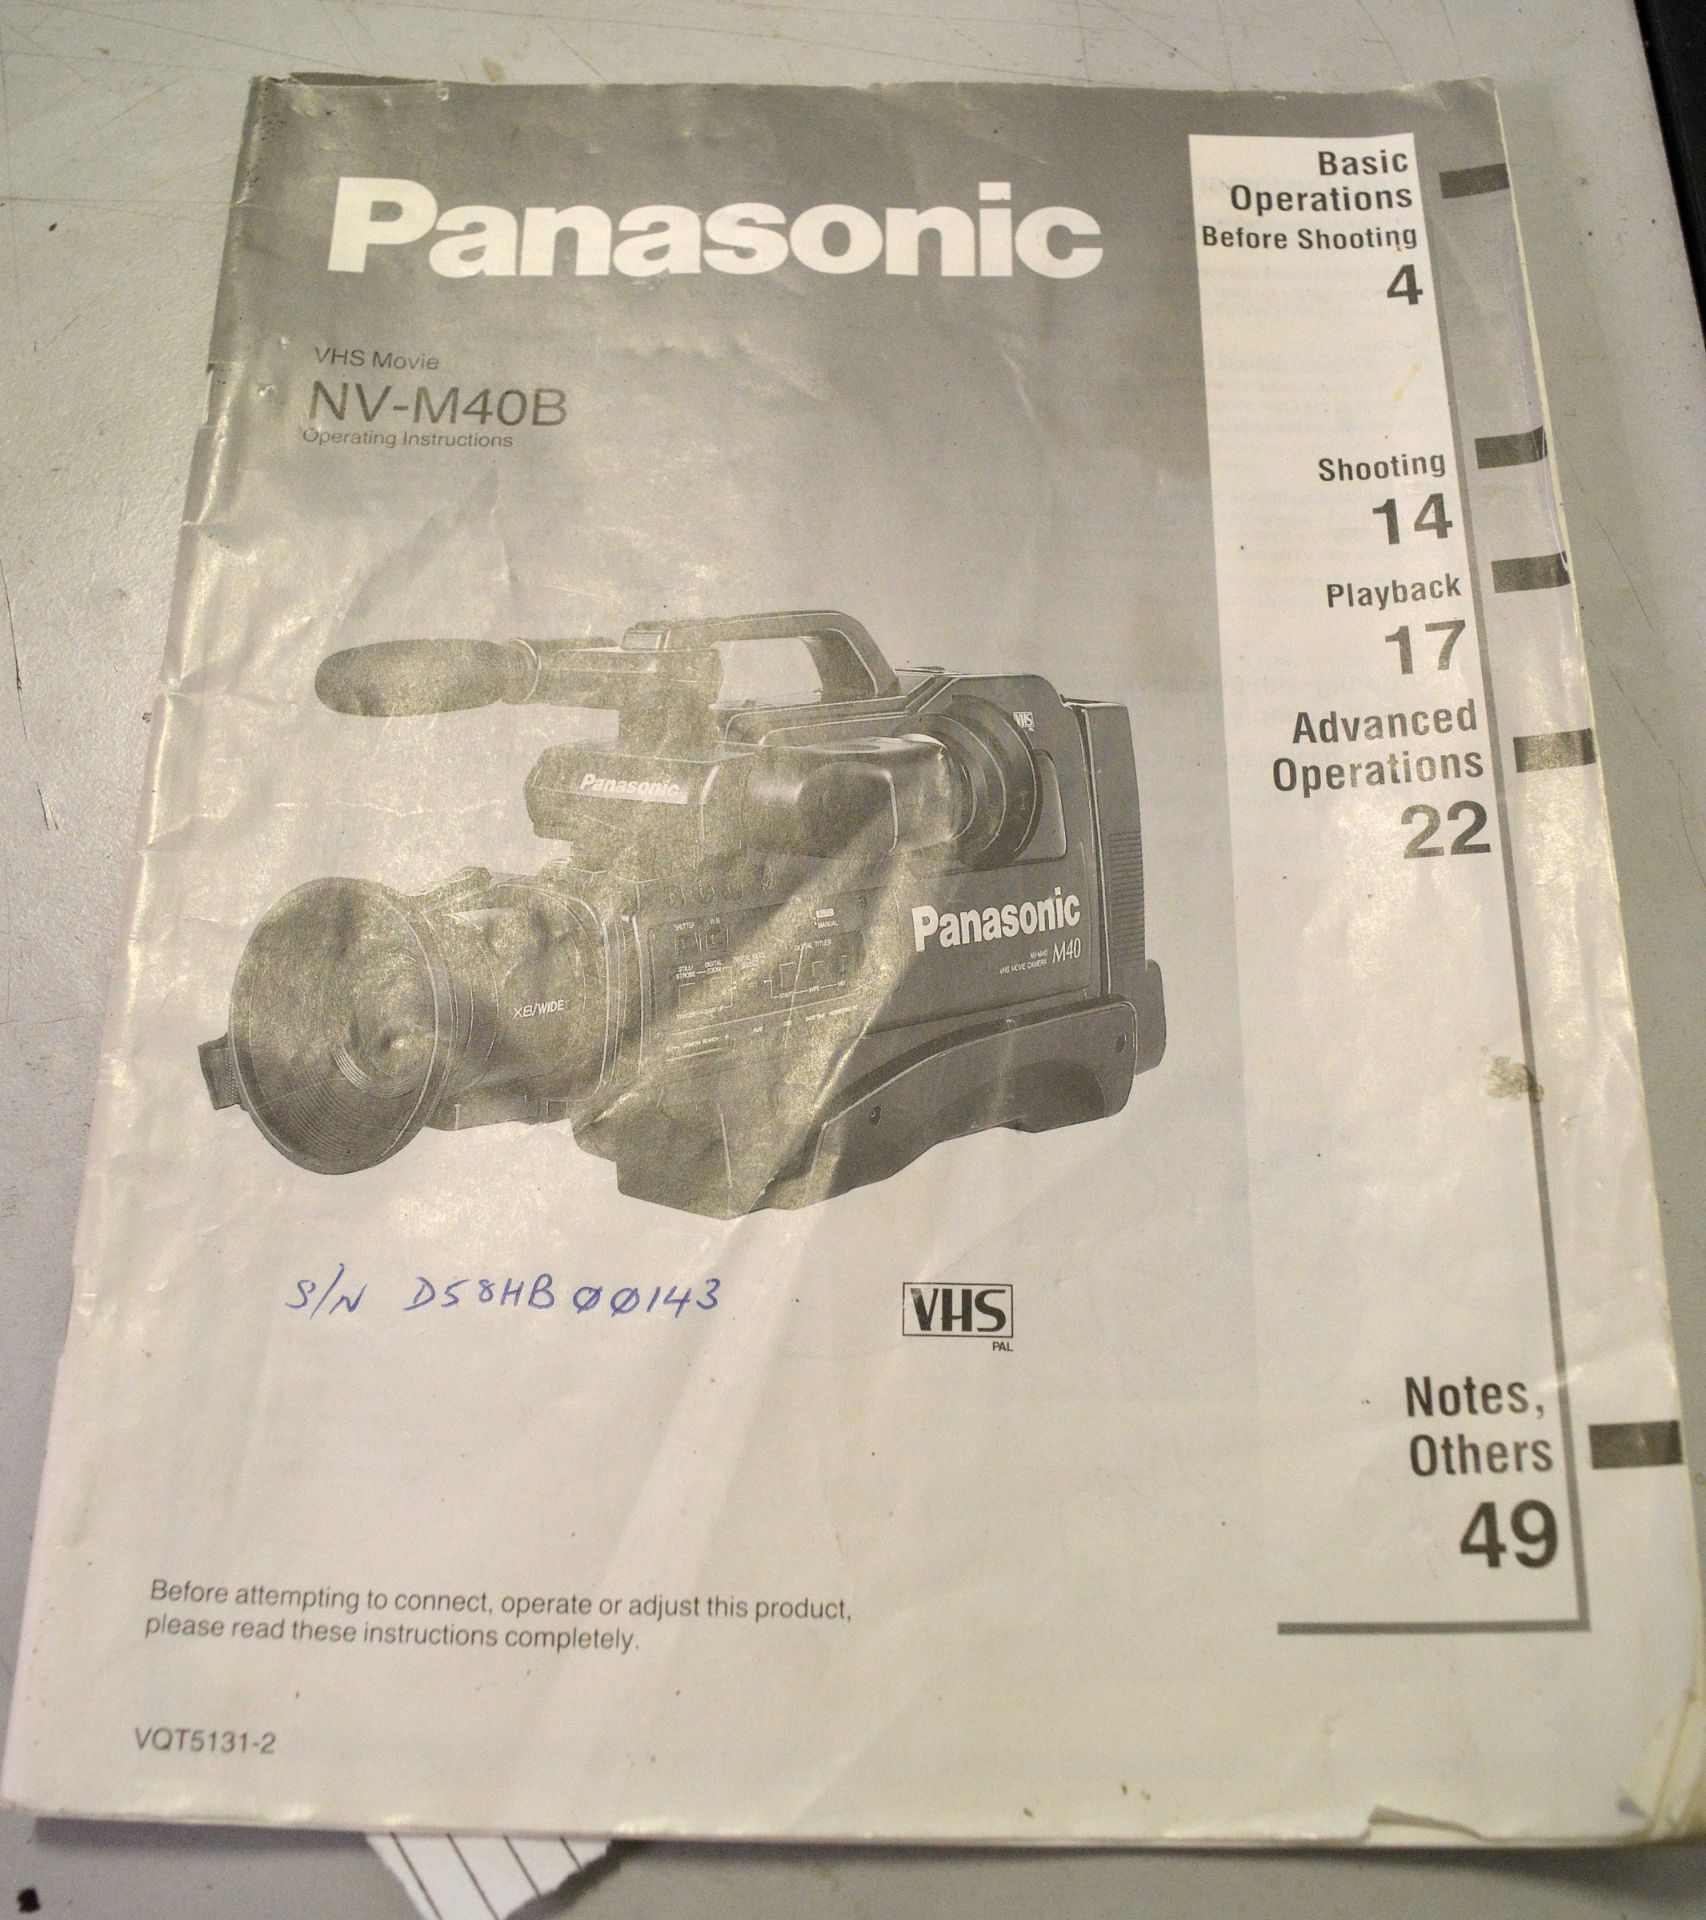 Panasonic NV-M40B VHS Video Camera with Case - Image 9 of 9